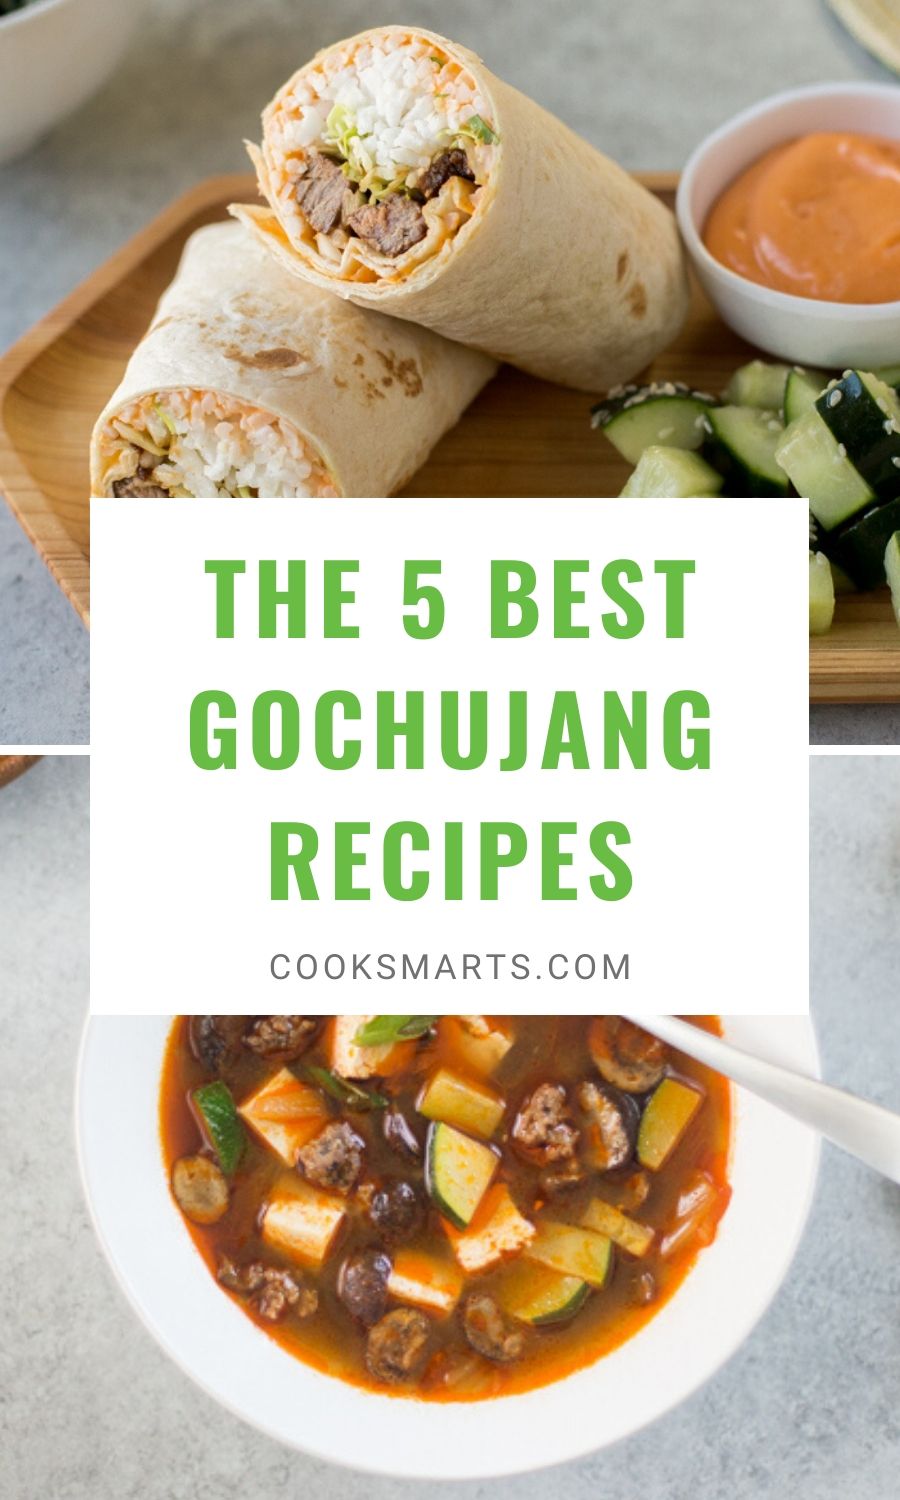 Top 5 Recipes with Gochujang | Cook Smarts